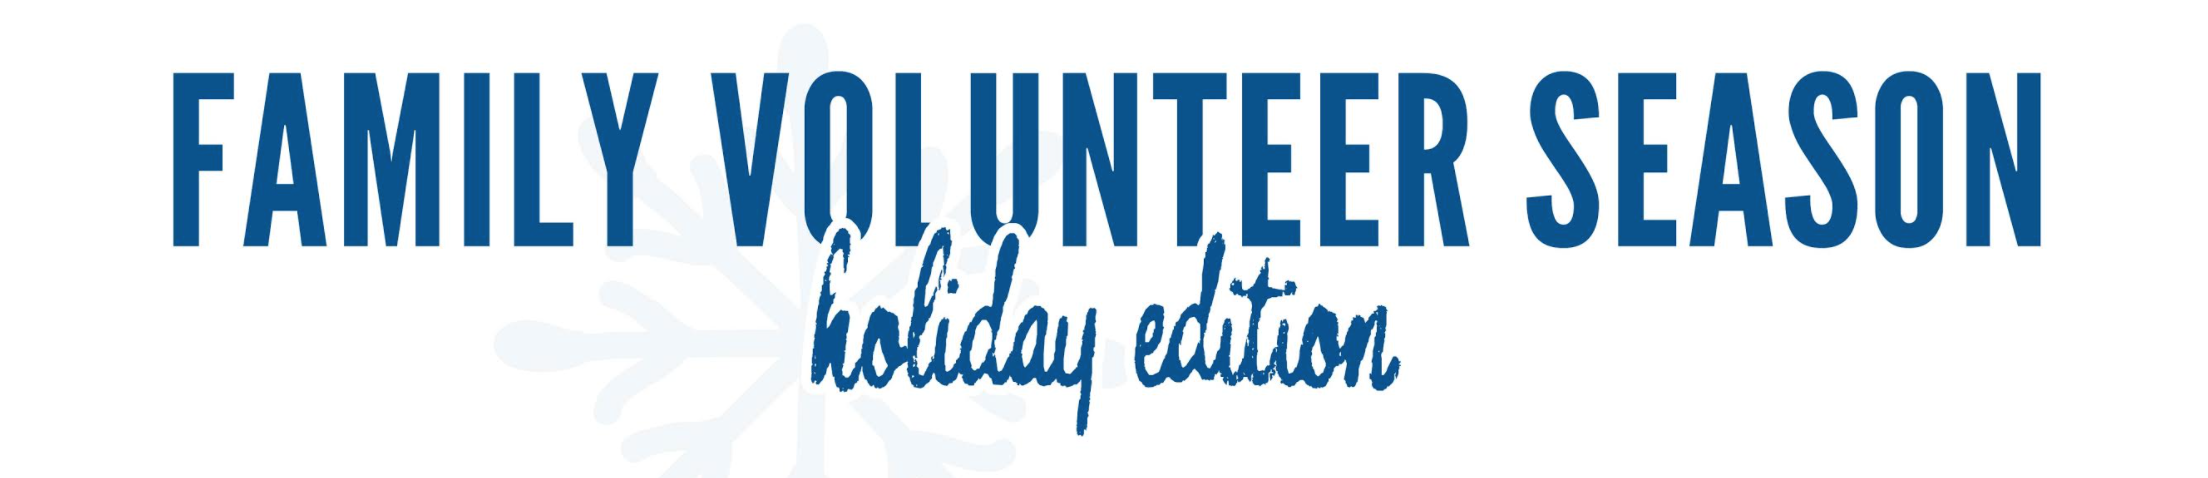 Family Volunteer Season: Holiday Edition Image